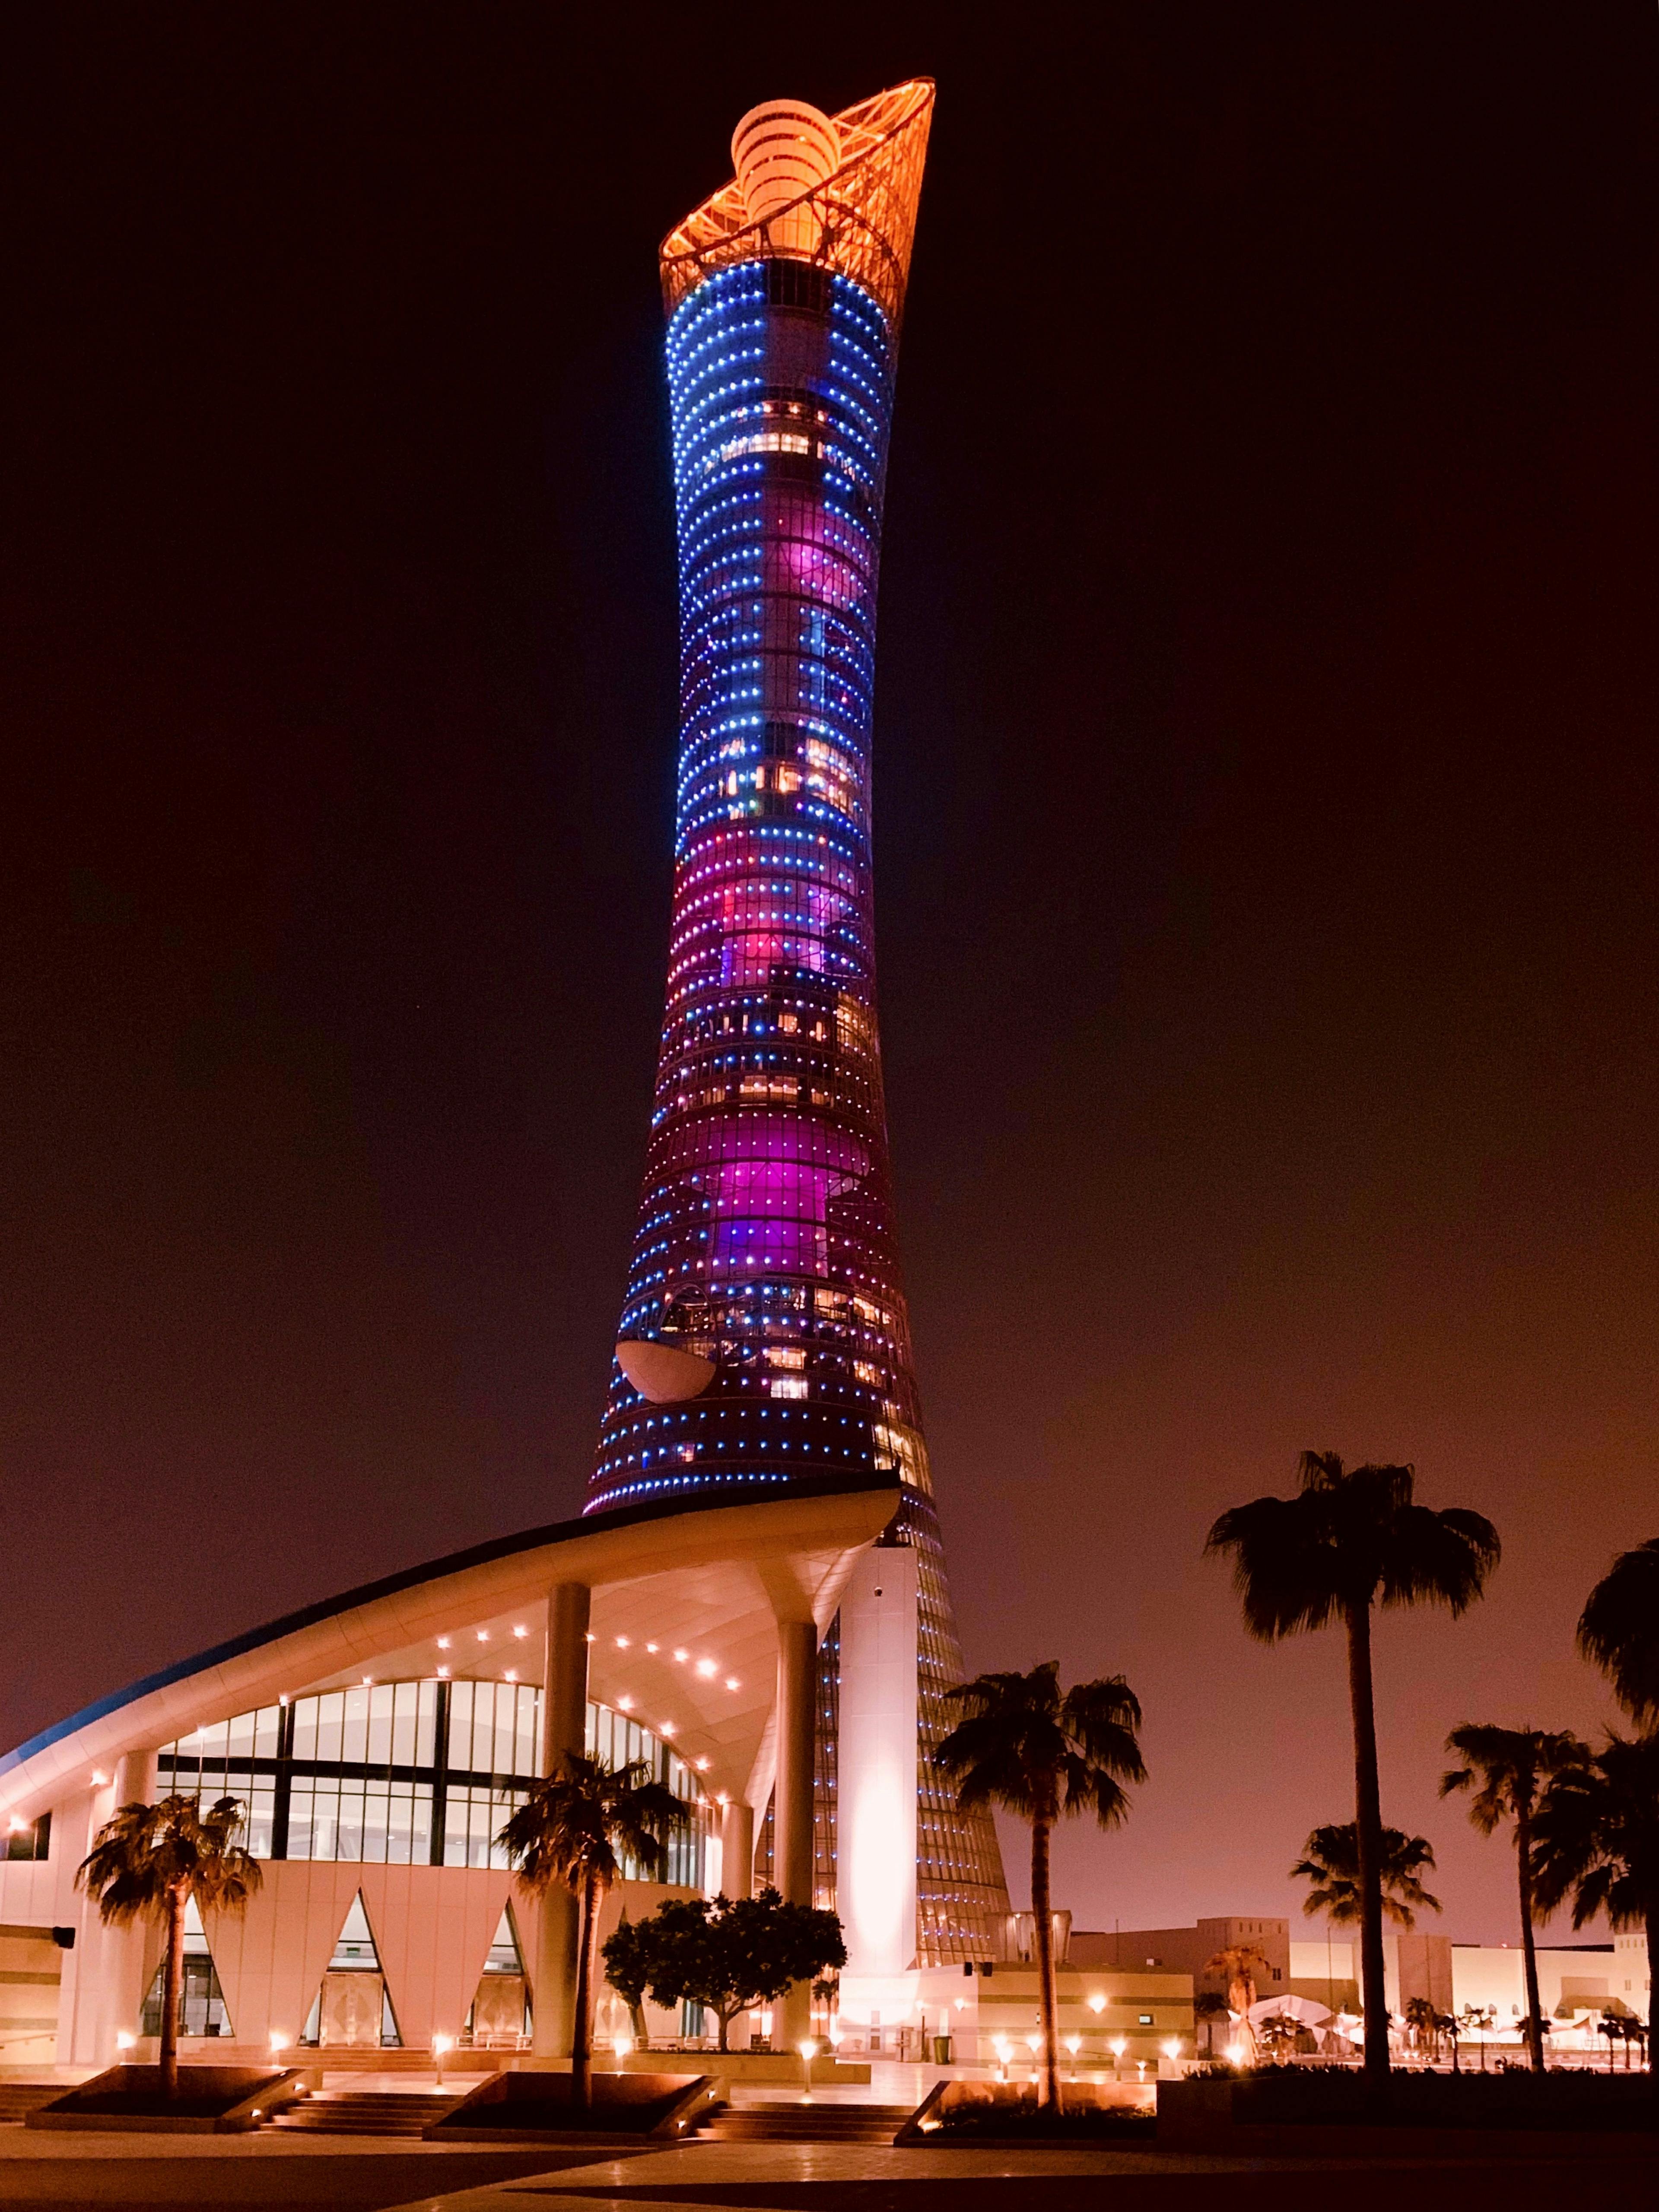 The Tornado Tower in Doha Qatar.